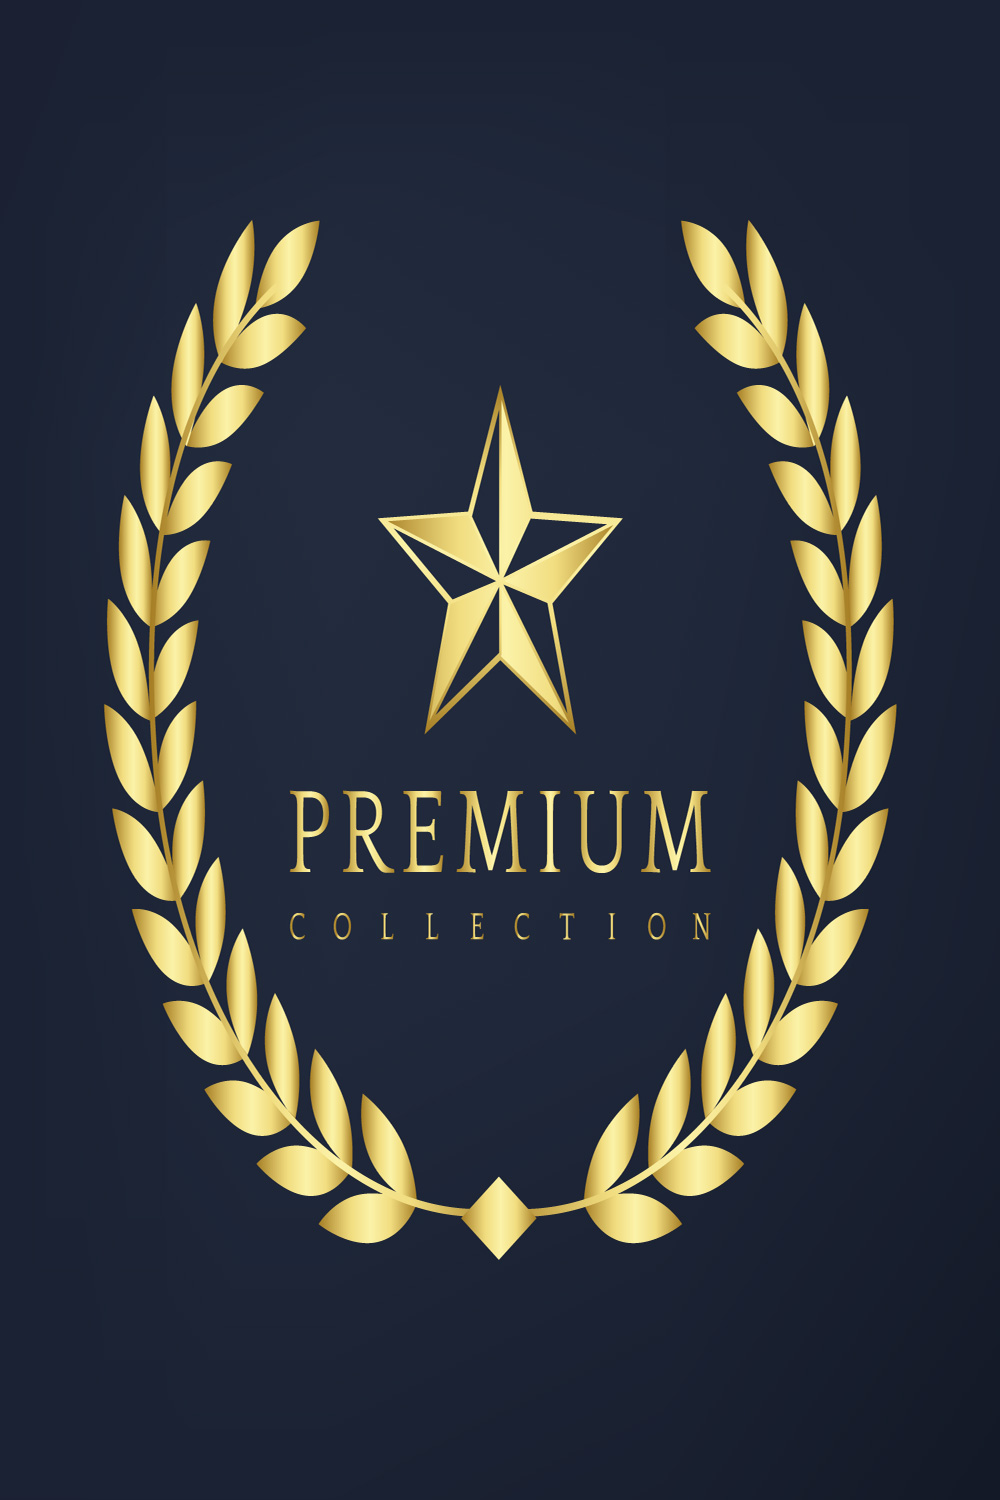 Premium collection badge design pinterest preview image.